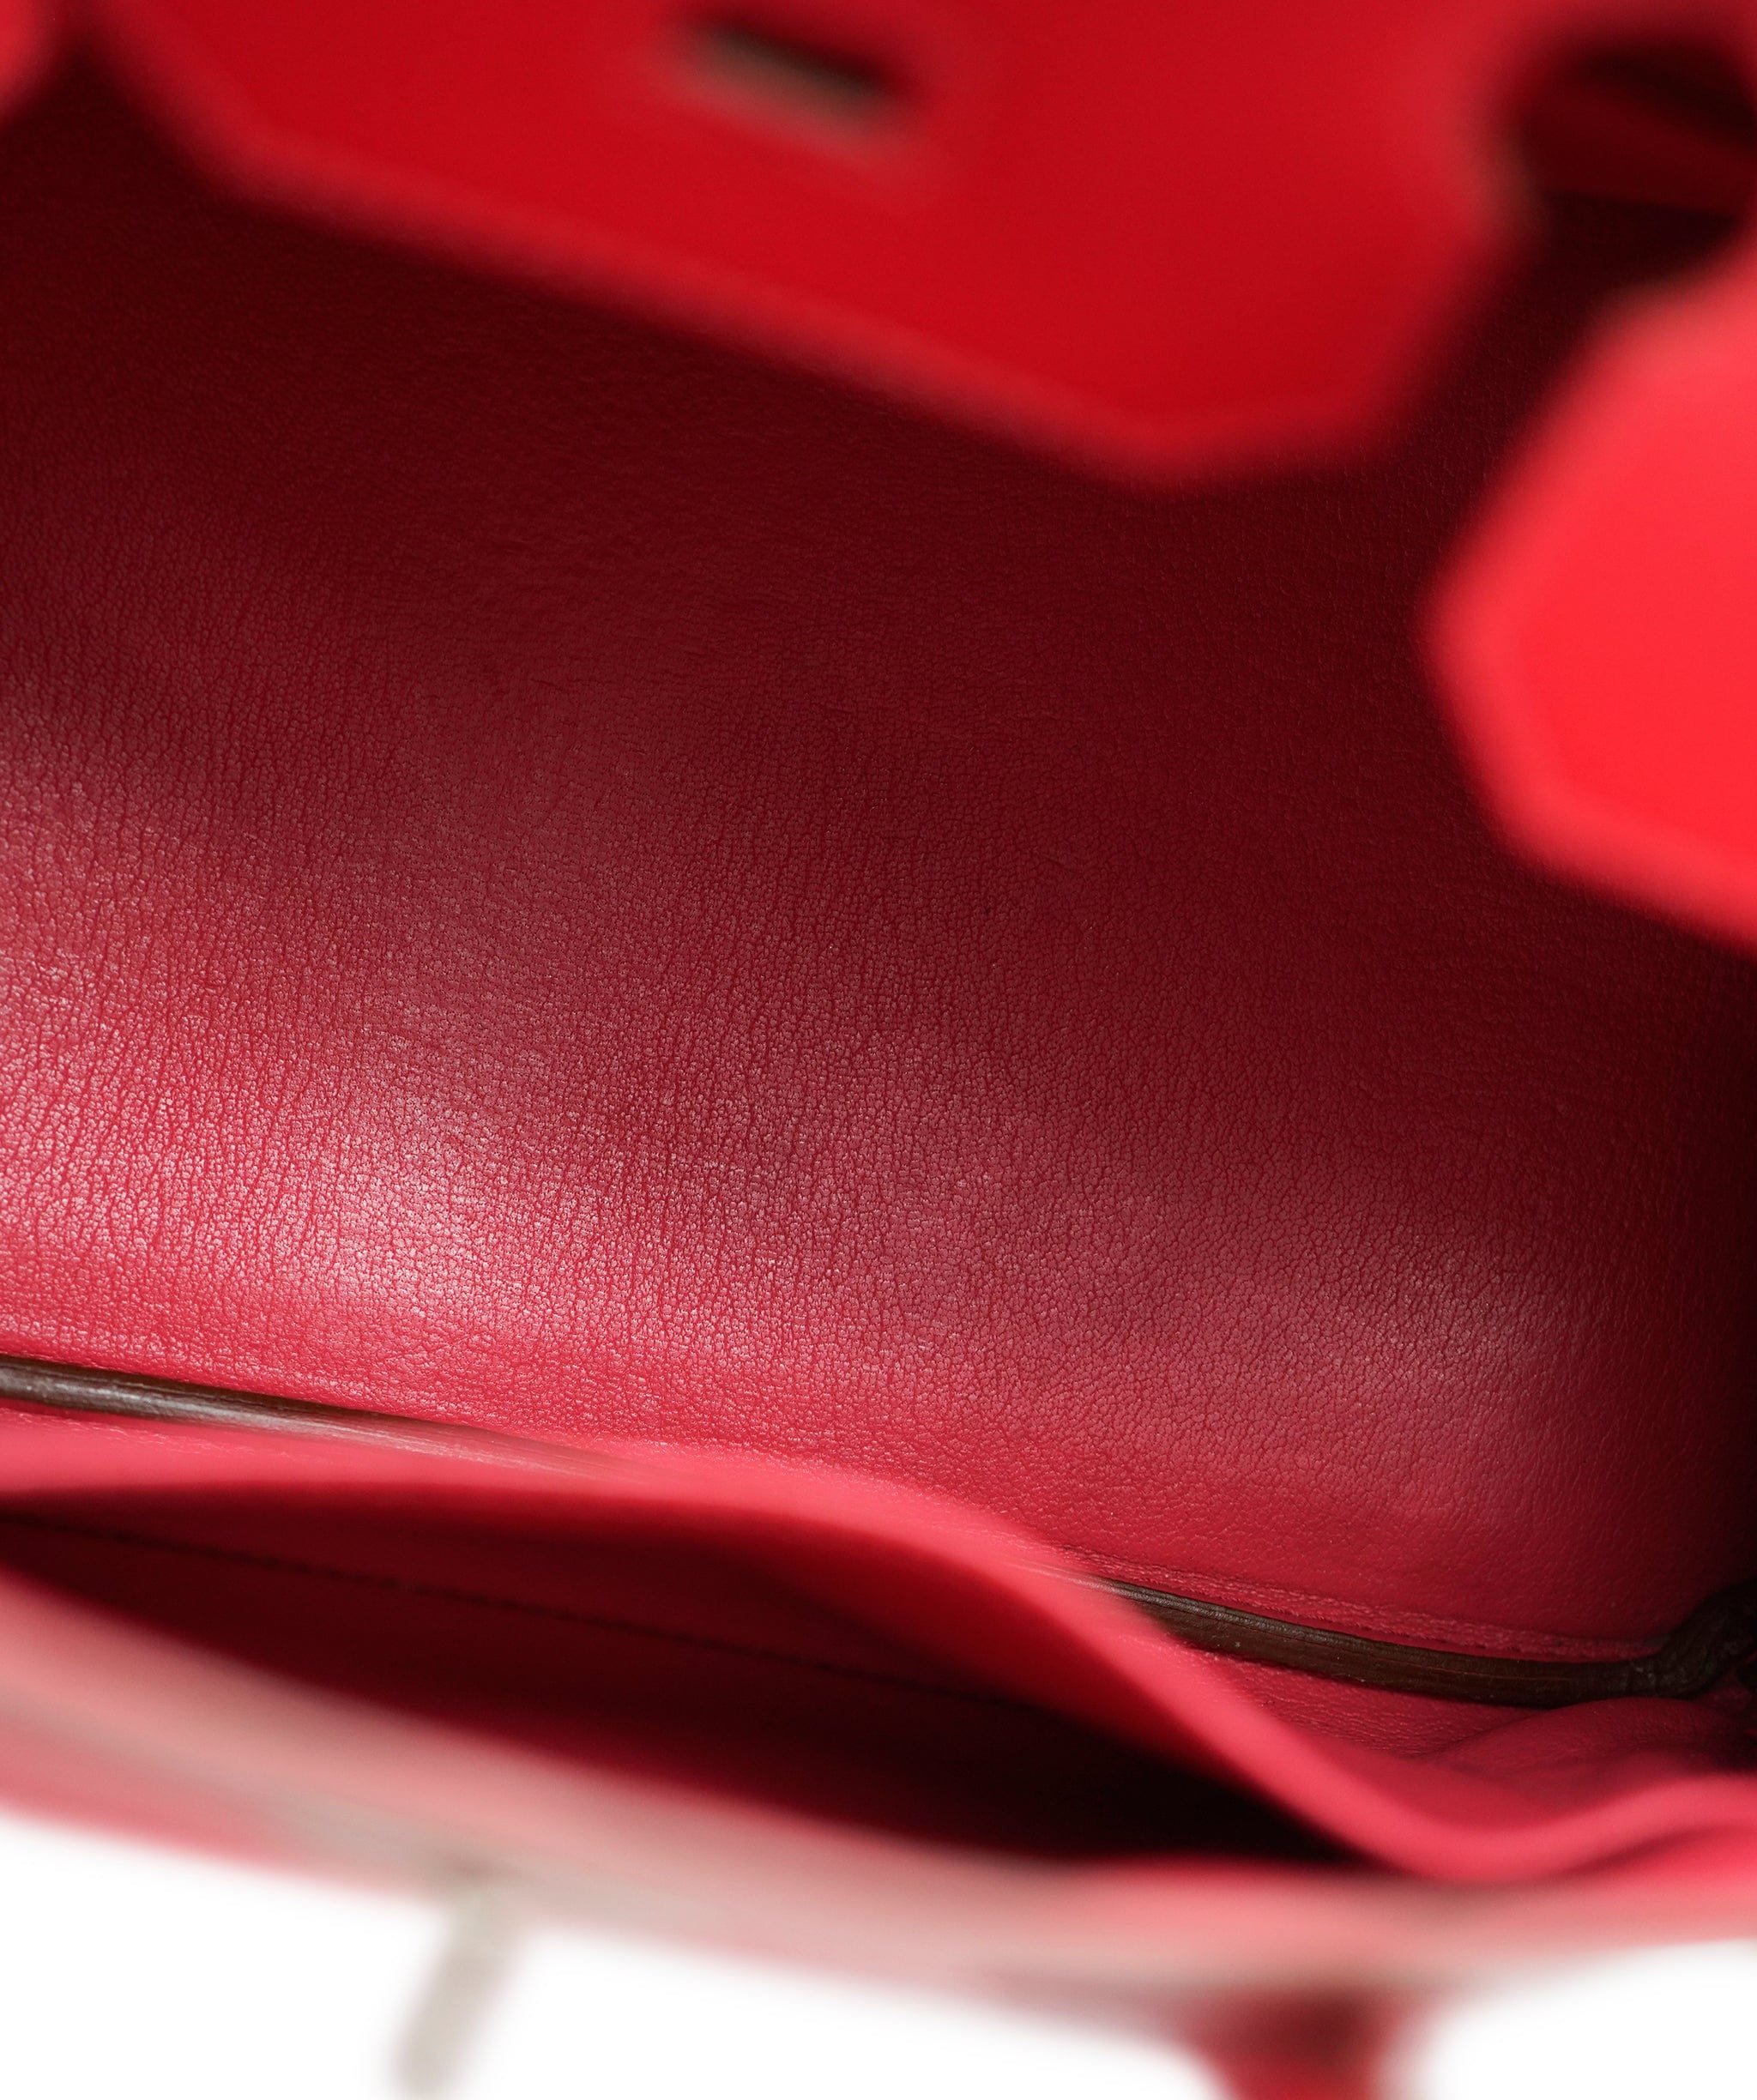 Hermès Hermes Birkin 35 Rouge Casaque Epsom Leather PHW  AGC1662